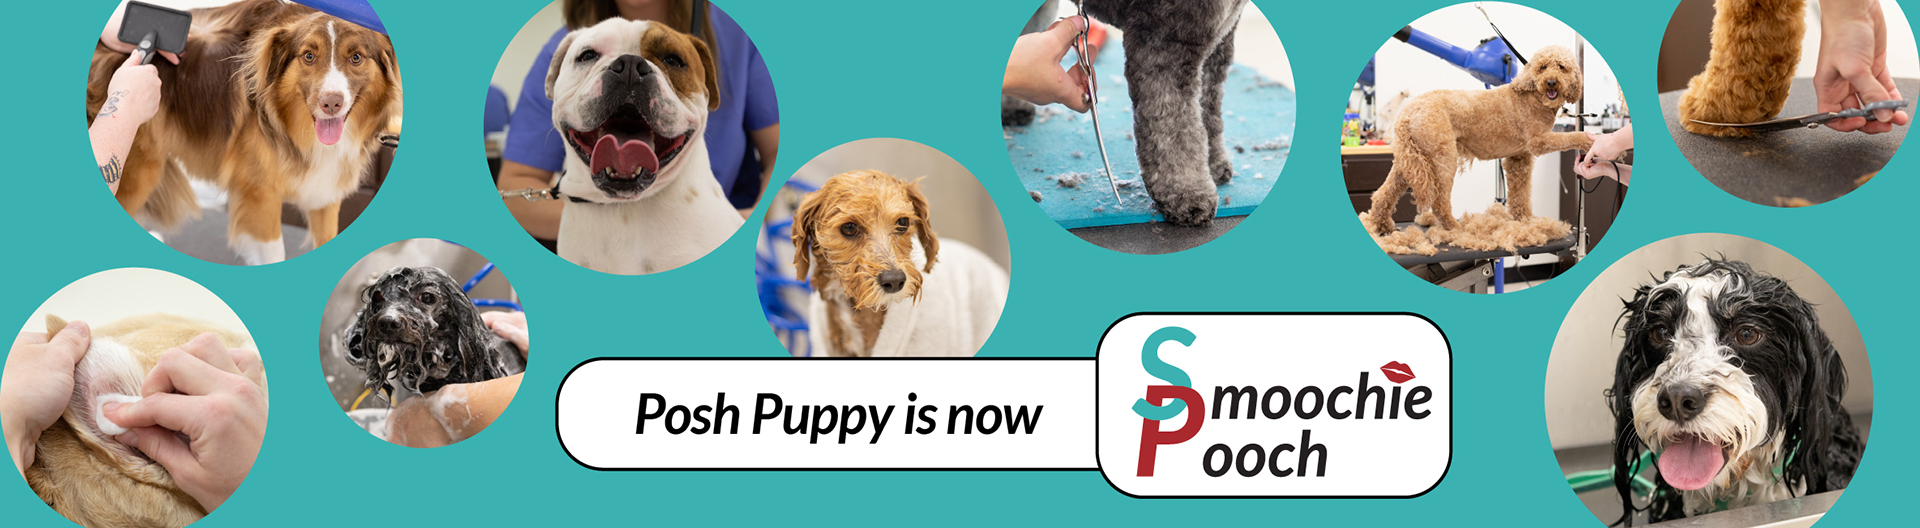 Posh Puppy Dog Grooming is now Smoochie Pooch in Roanoke, IN